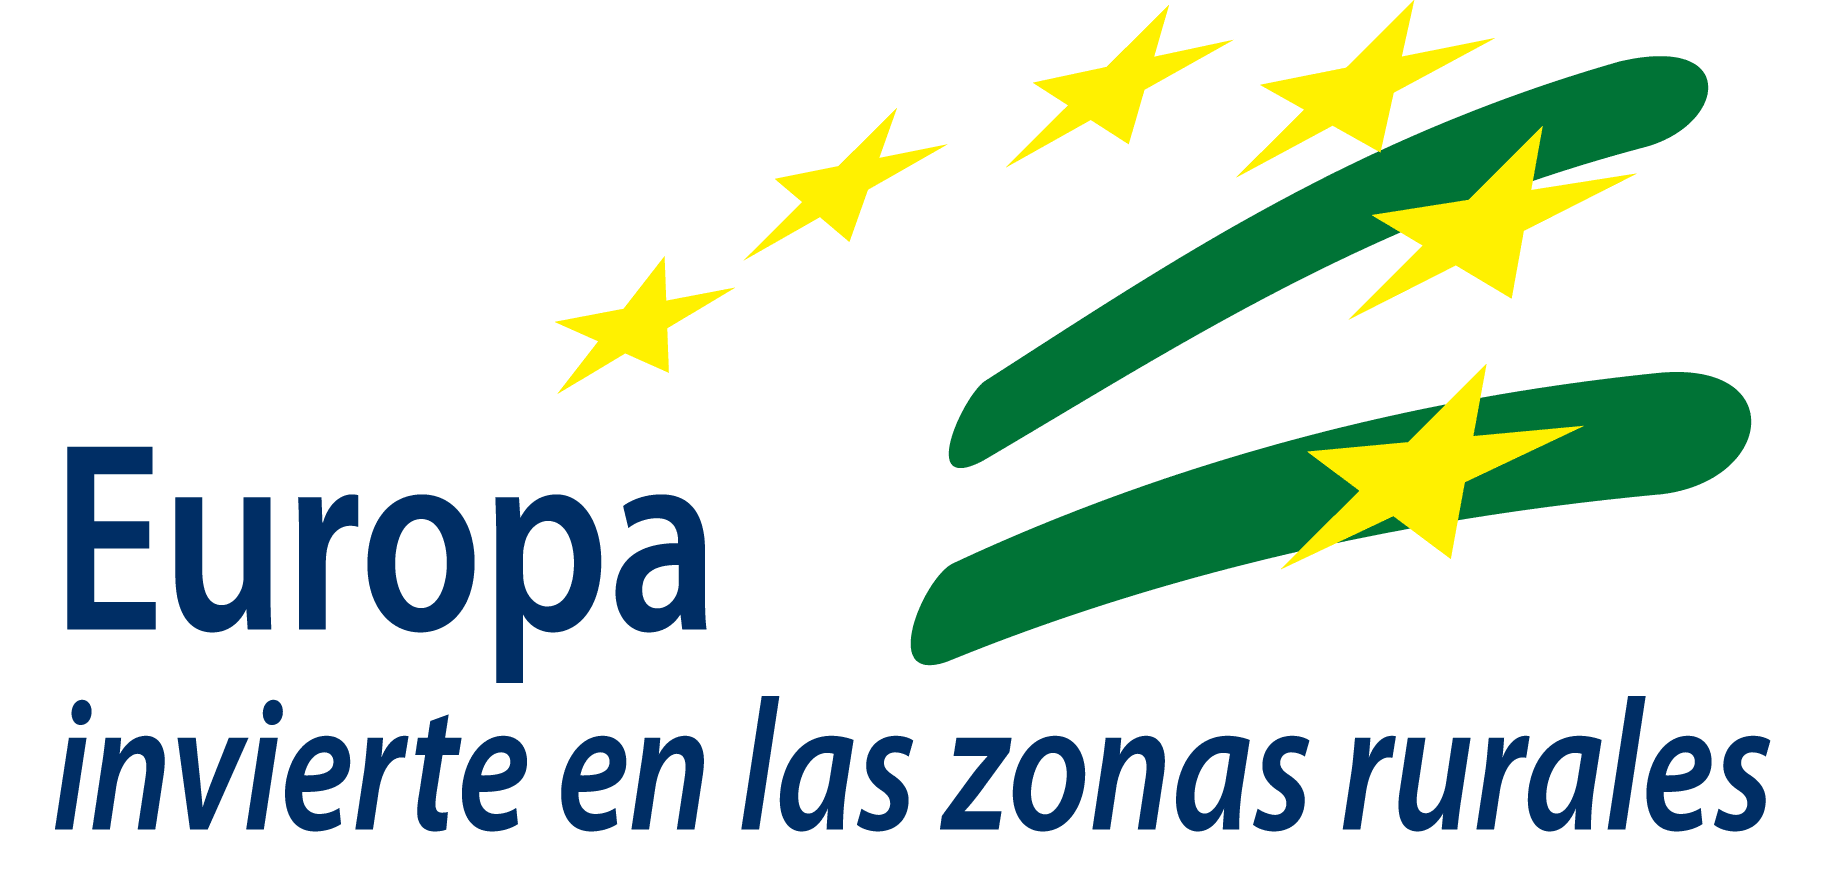 europa invierte zonas rurales color castellano